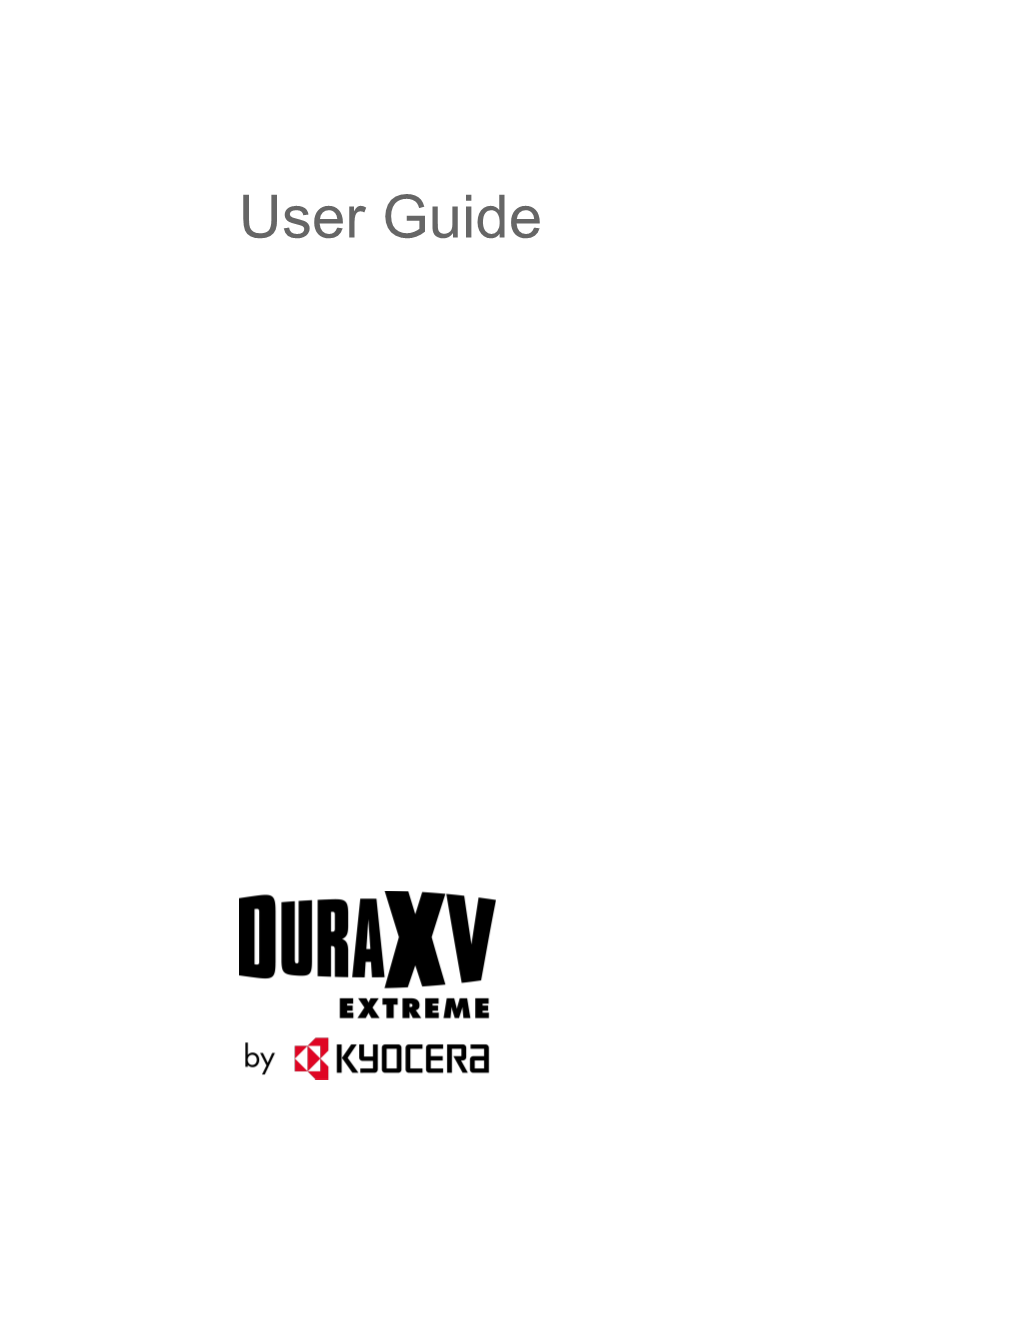 KYOCERA Duraxv Extreme User Guide